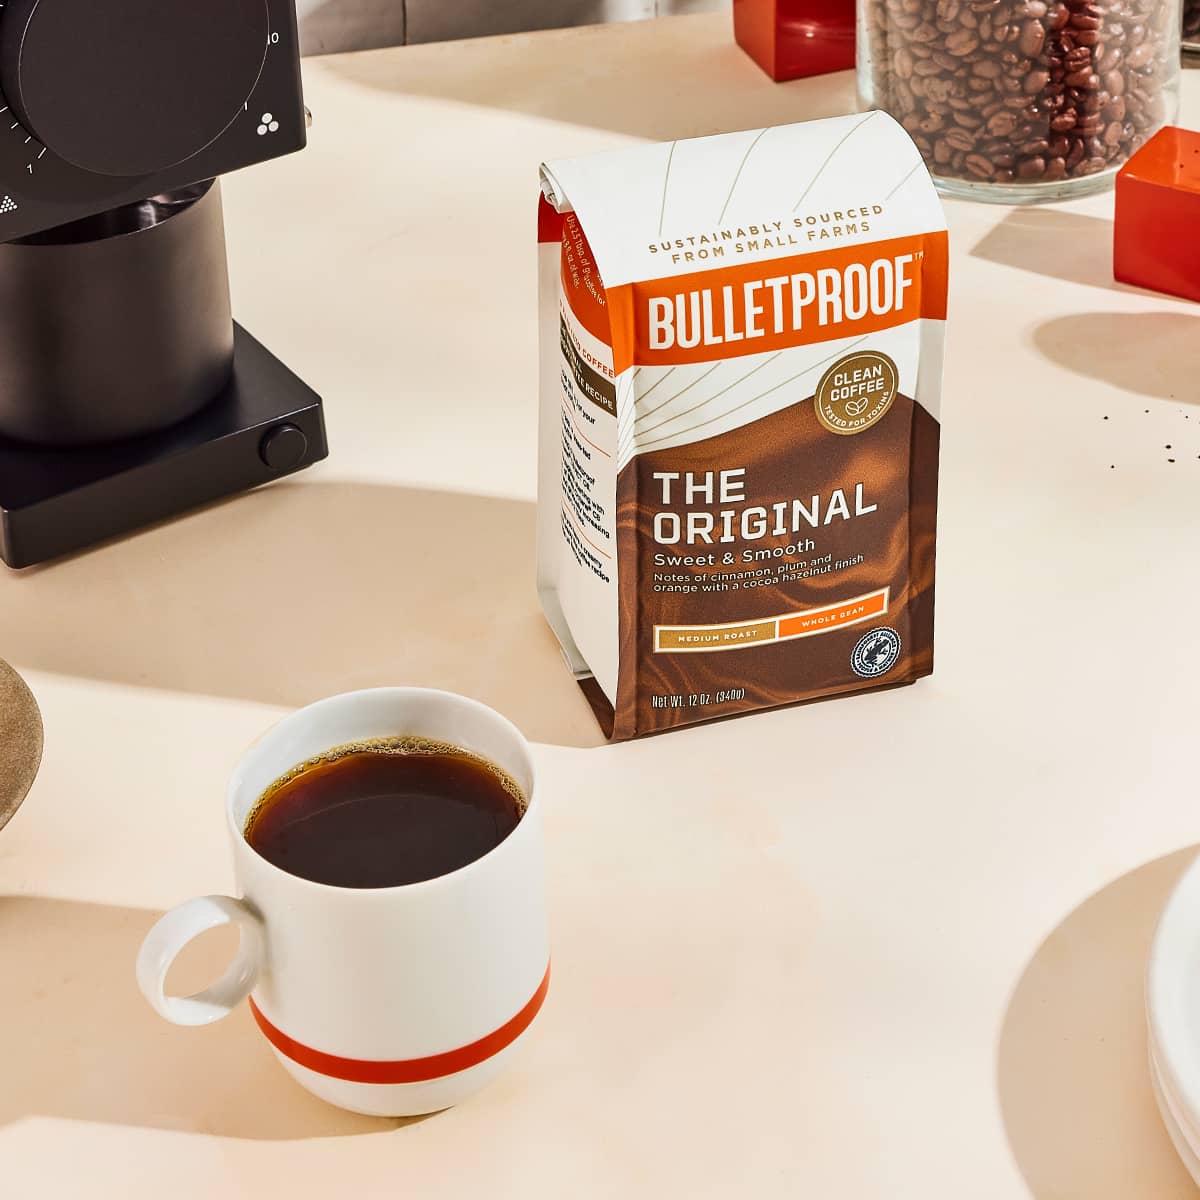 Bulletproof ザ・オリジナル、ミディアムロースト 340g WHOLE BEAN COFFEE THE ORIGINAL, MEDIUM ROAST - HAPIVERI